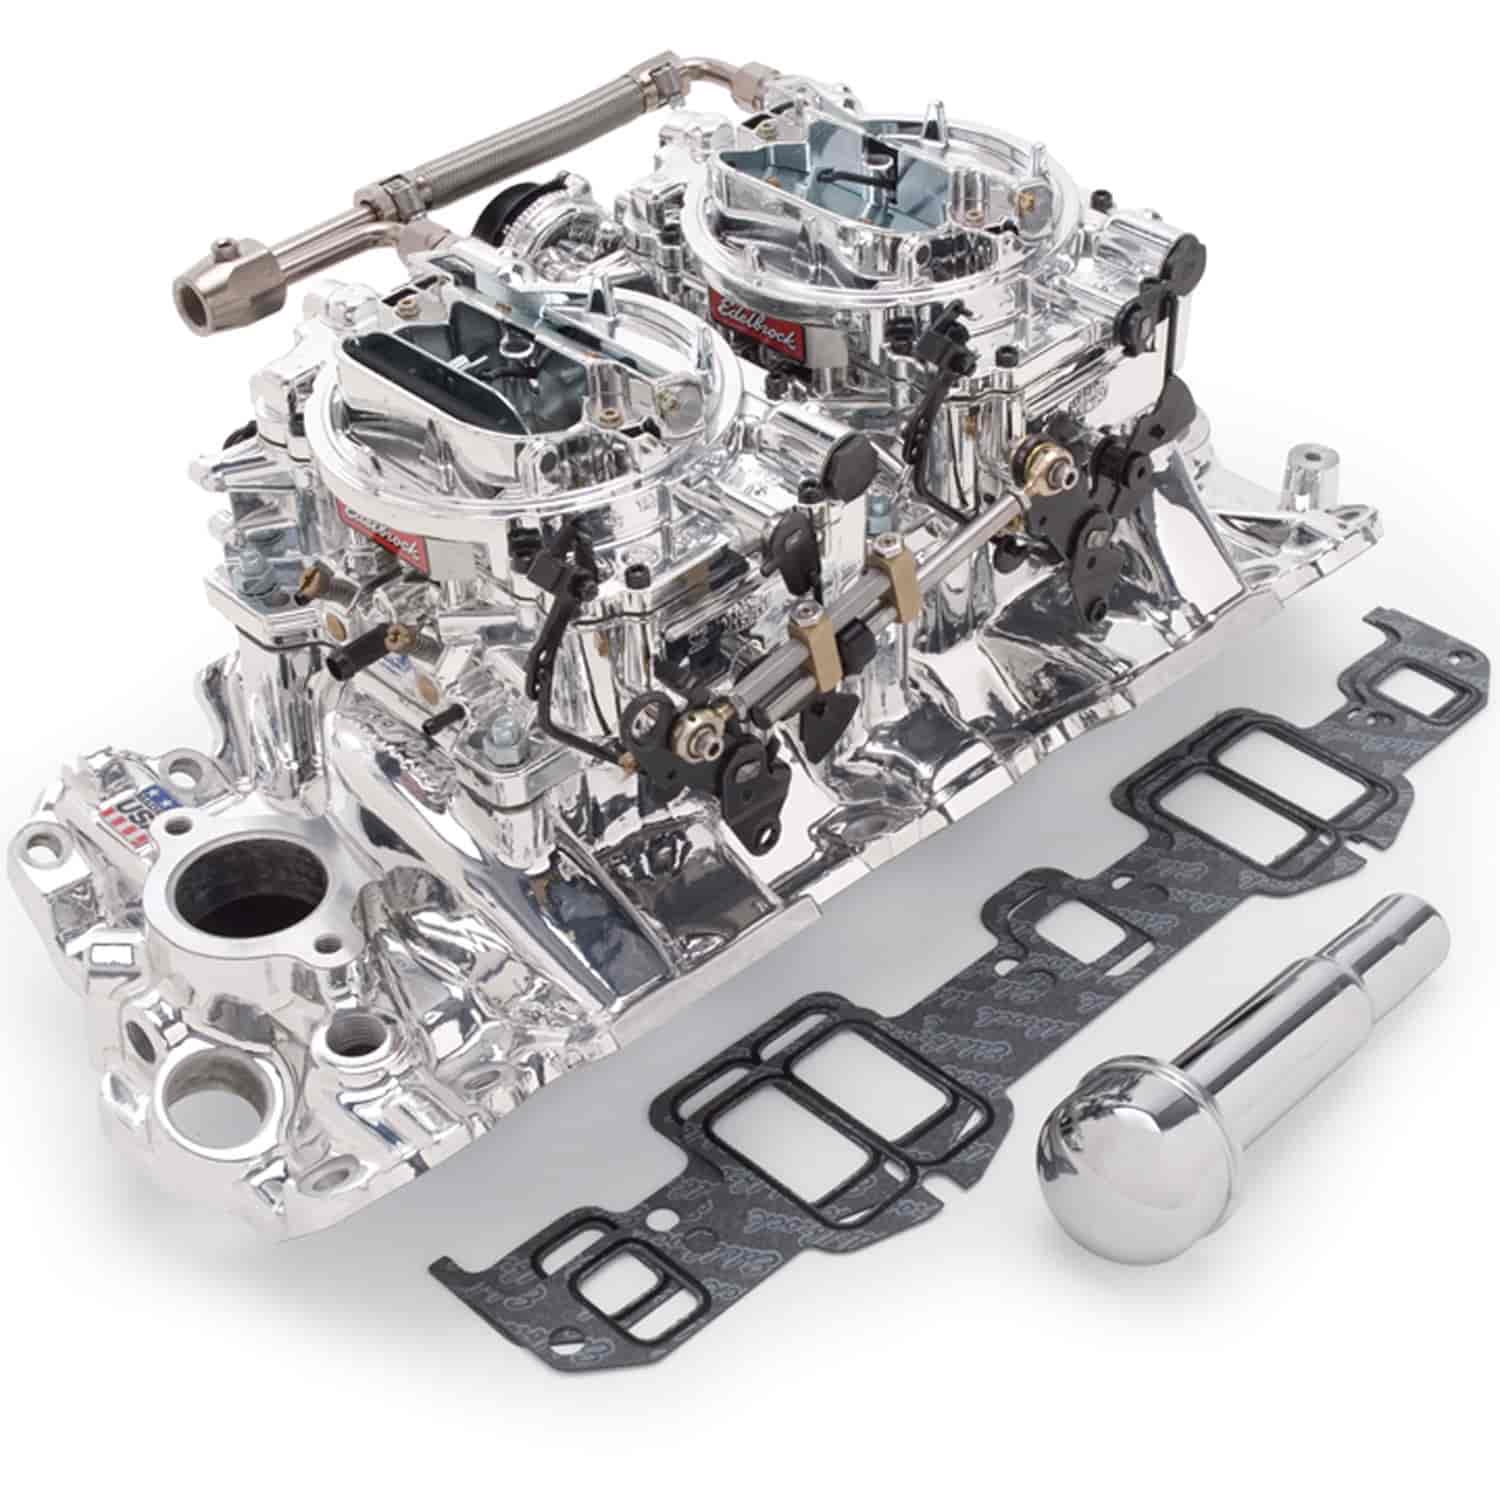 RPM Dual-Quad Manifold and Carburetor Kit for Chevy W-Series 348/409 Large Port with Endurashine Finish